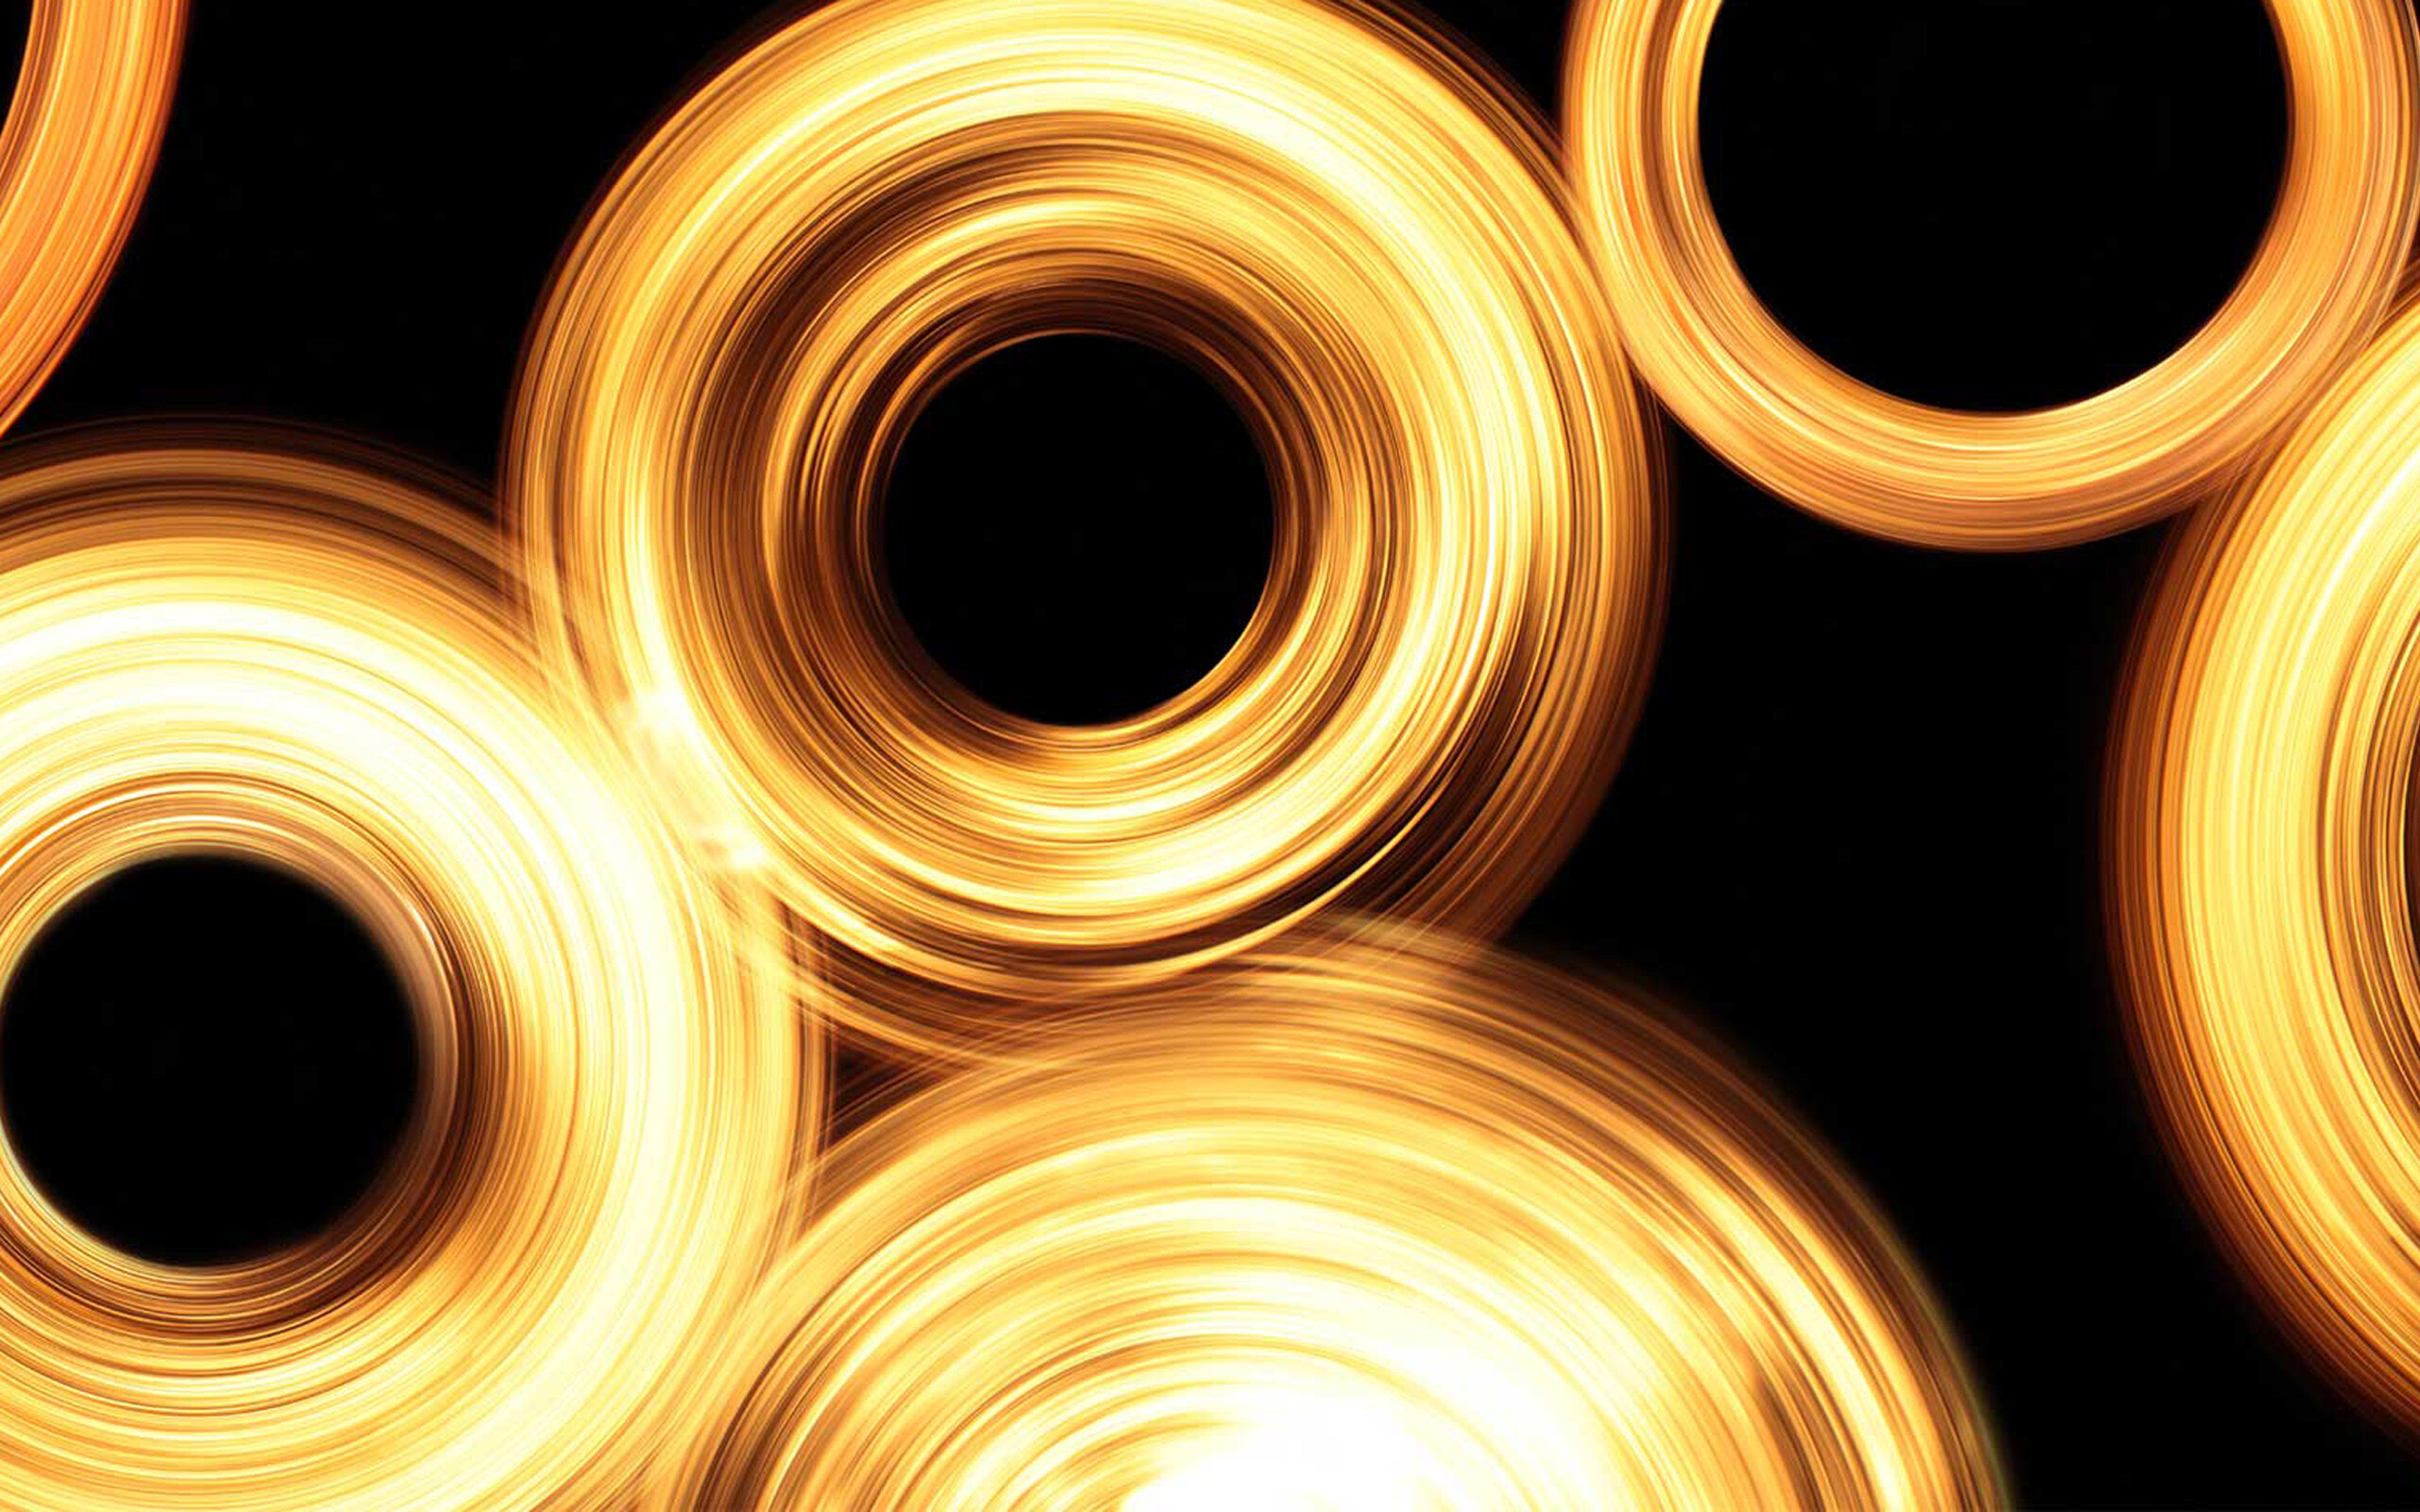 Gold Lights: Shining lights circles, Abstract, Light effect, Gold glowing neon circles. 2560x1600 HD Wallpaper.